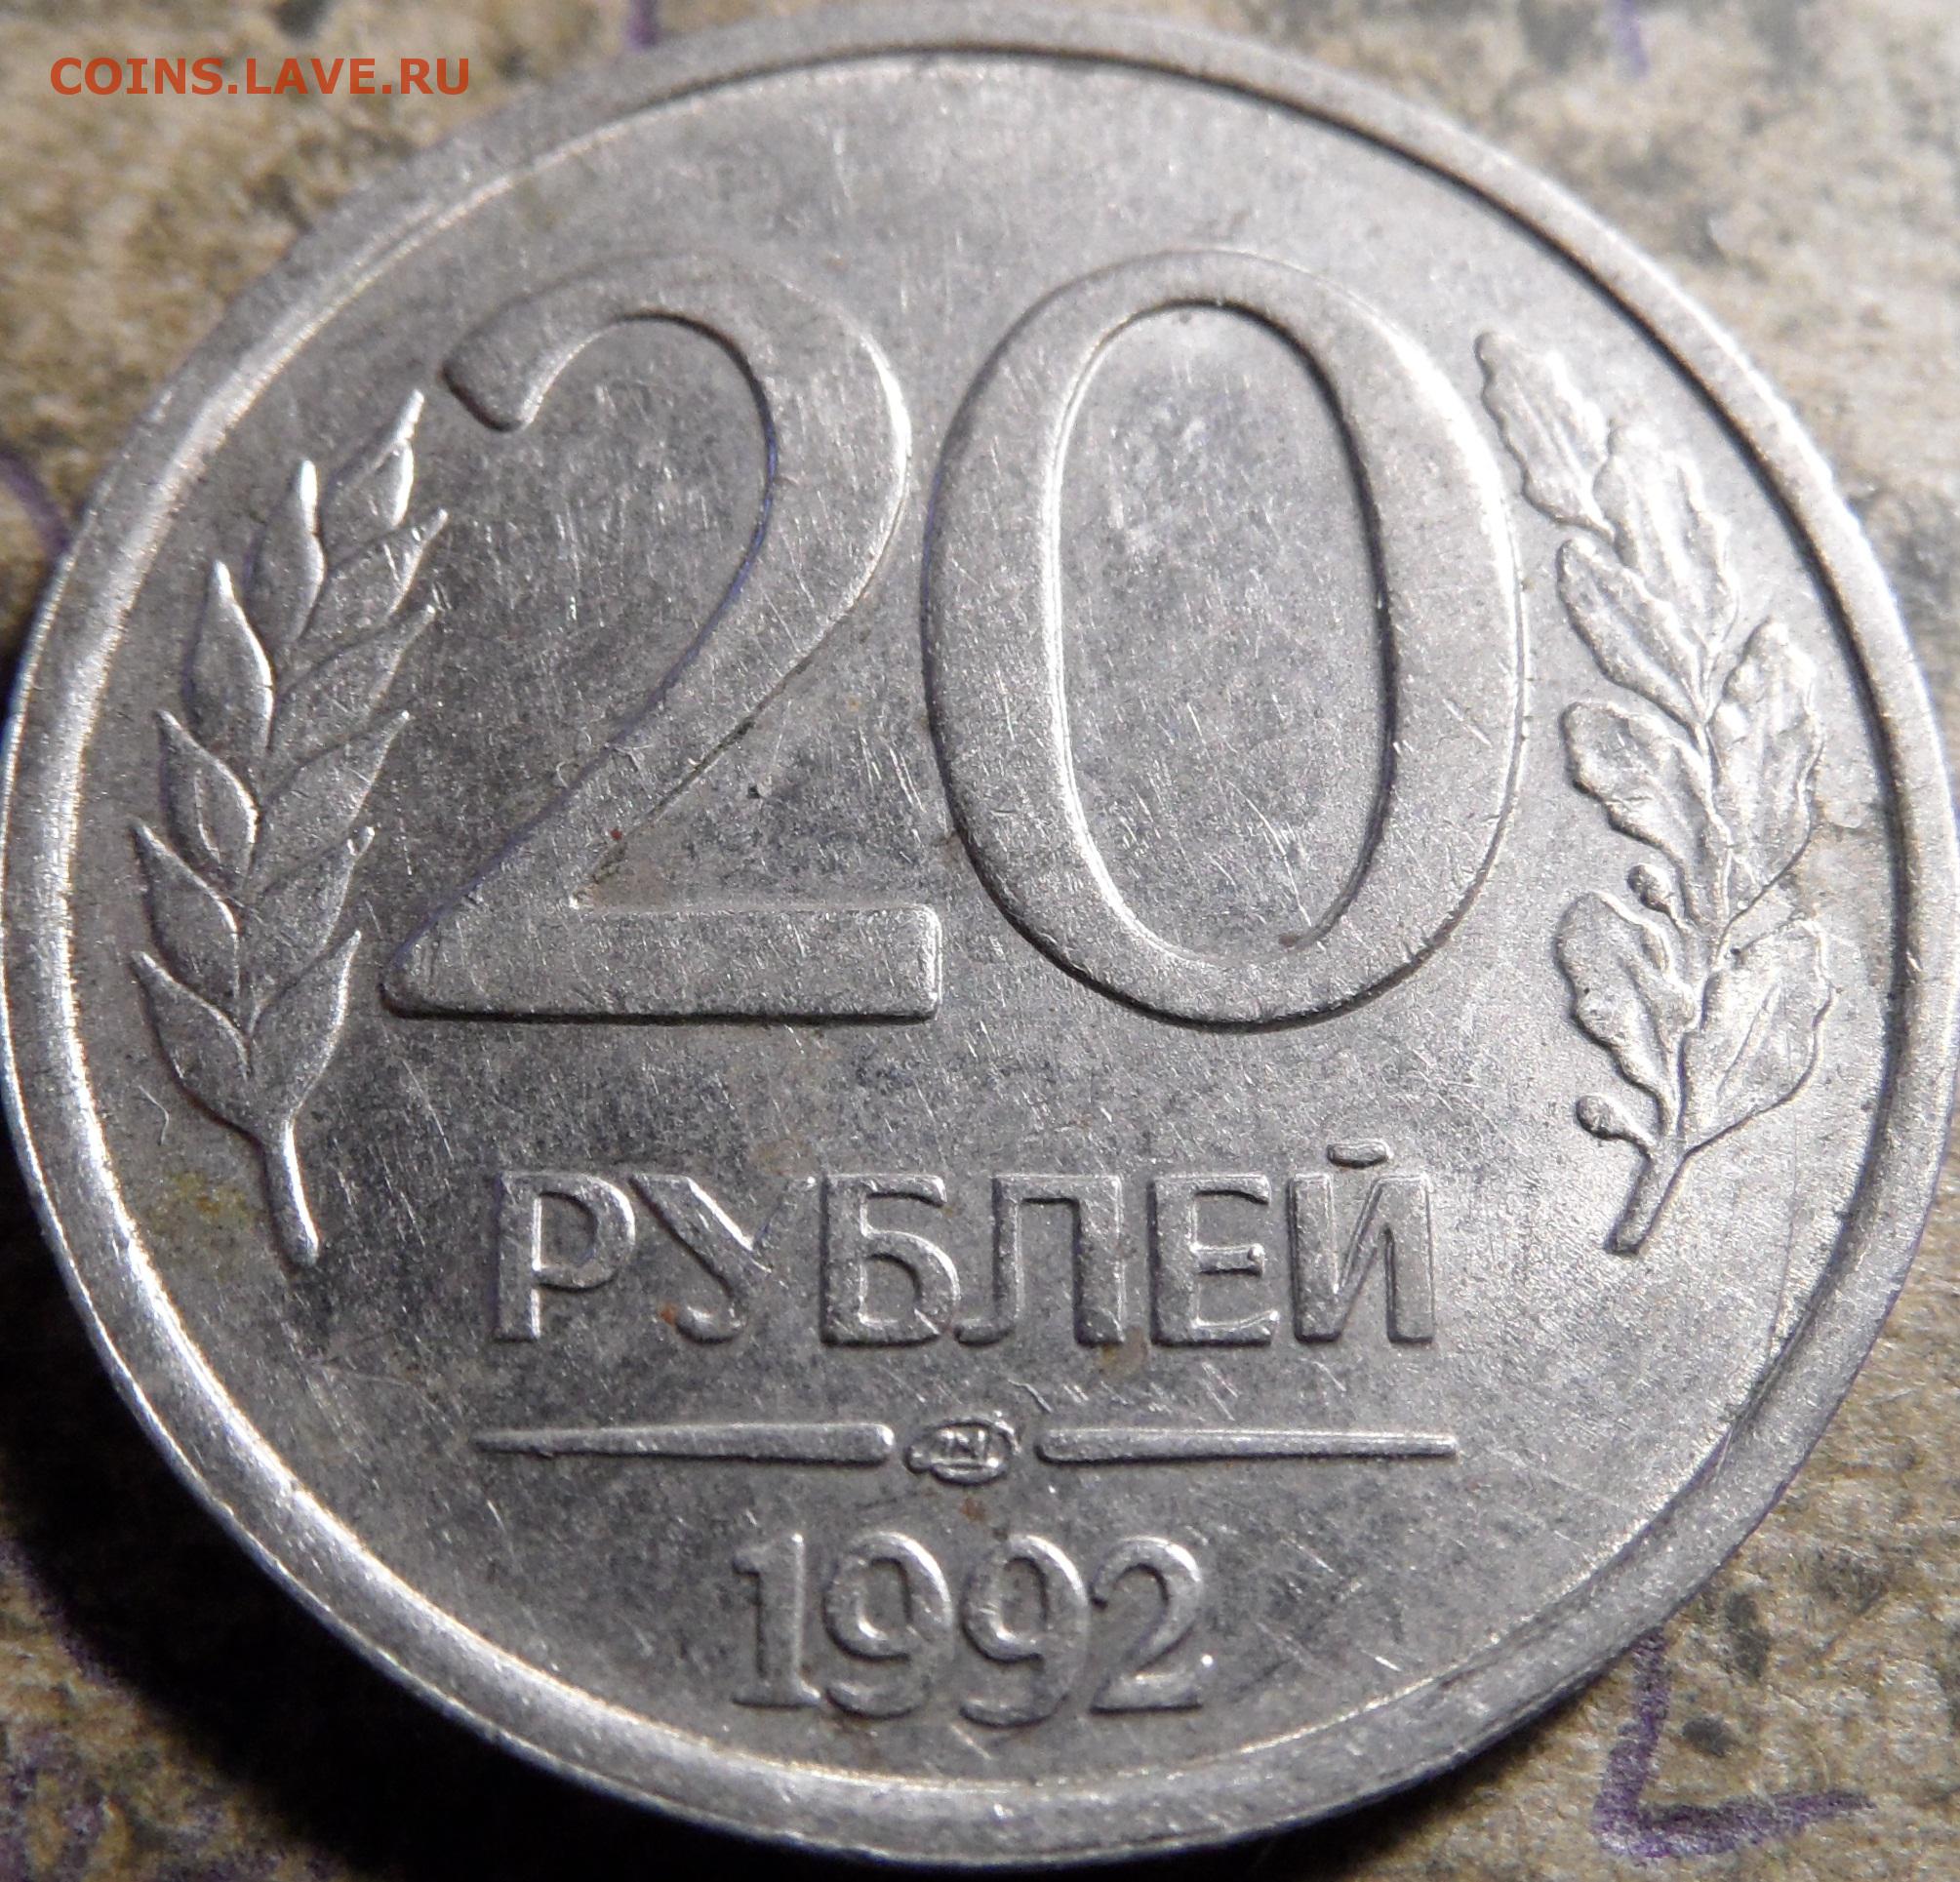 300 рублей в 60 годы. 20 Рублей 1992 ЛМД. Монета 20 копеек 1992 года. Монета 20 рублей 1992. Двадцать рублей монета.